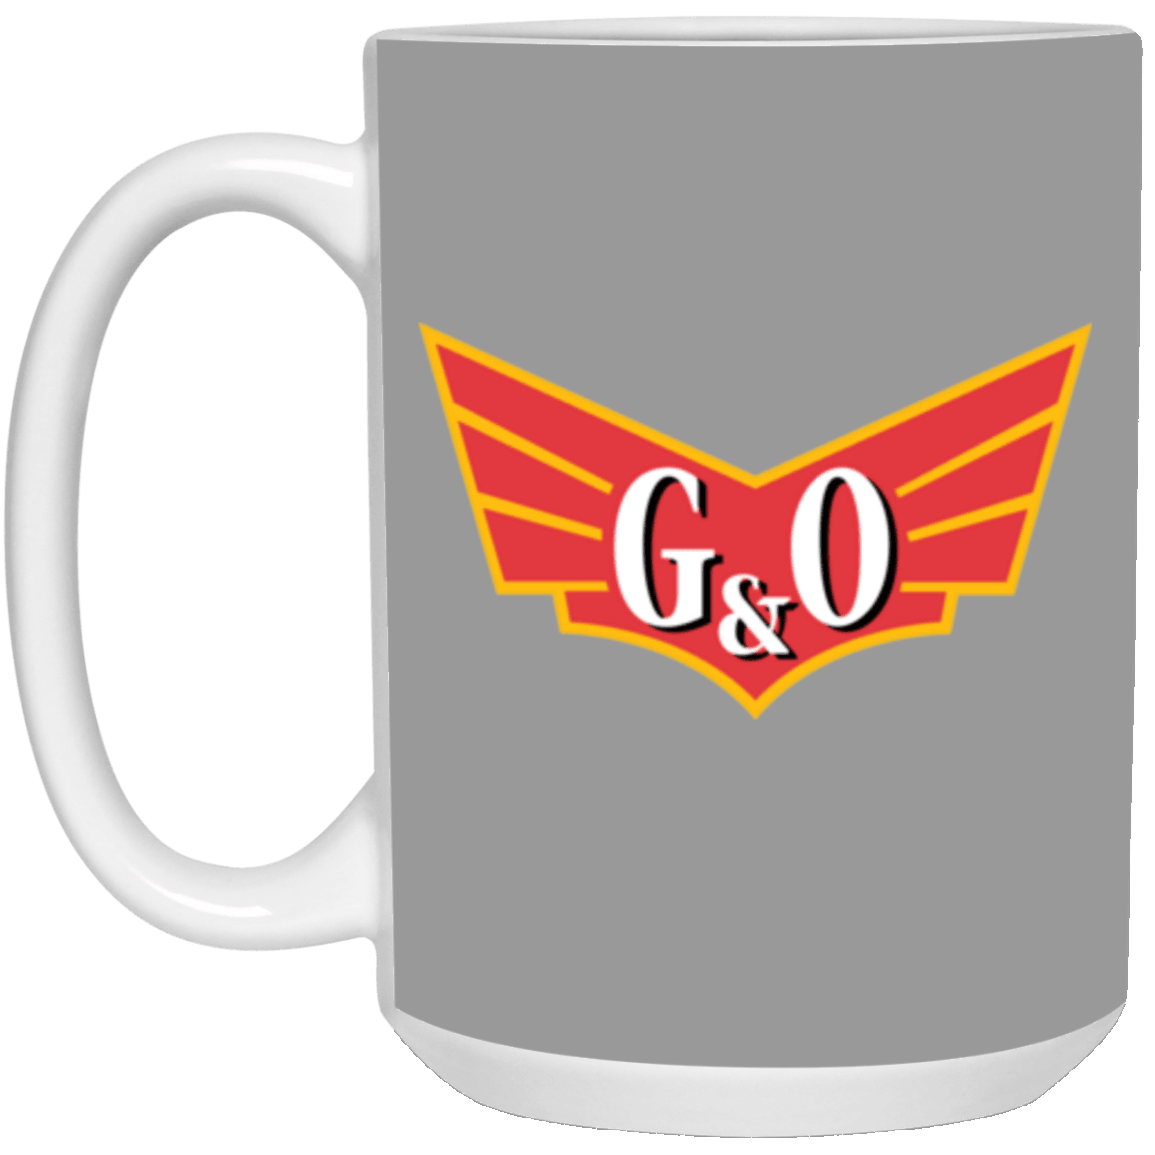 Gulf & Ohio Railway Logo 15 oz. Ceramic Mug - Broken Knuckle Apparel